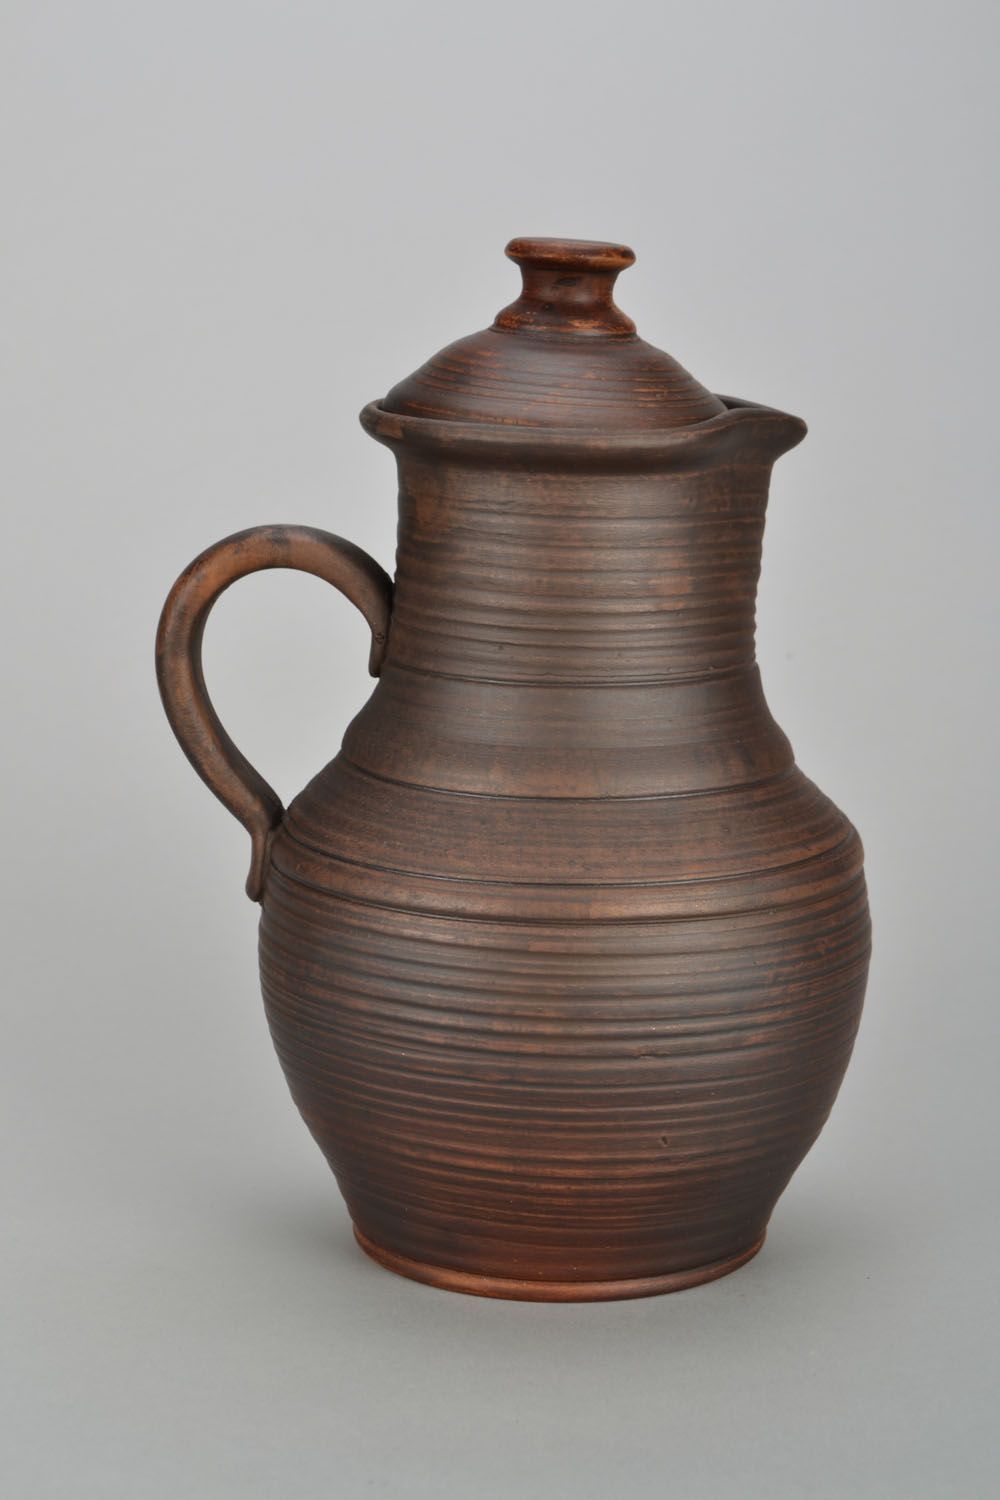 45 oz ceramic milk jug with handle and lid in dark brown color 1,87 lb photo 3